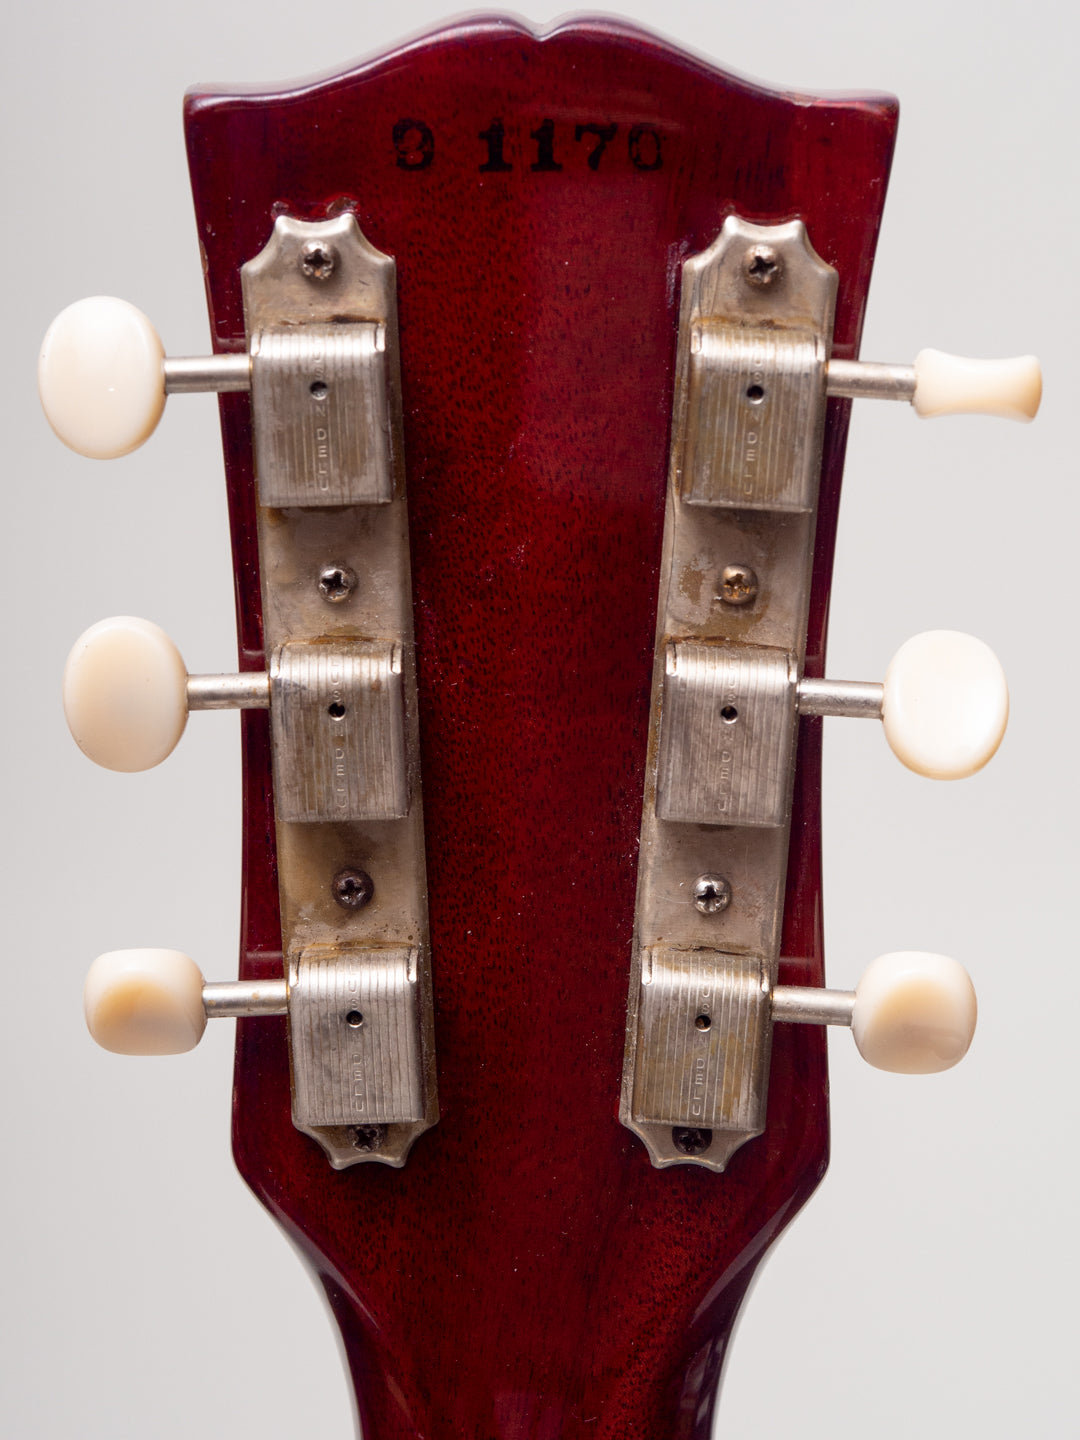 1959 Gibson Les Paul Junior Double Cut